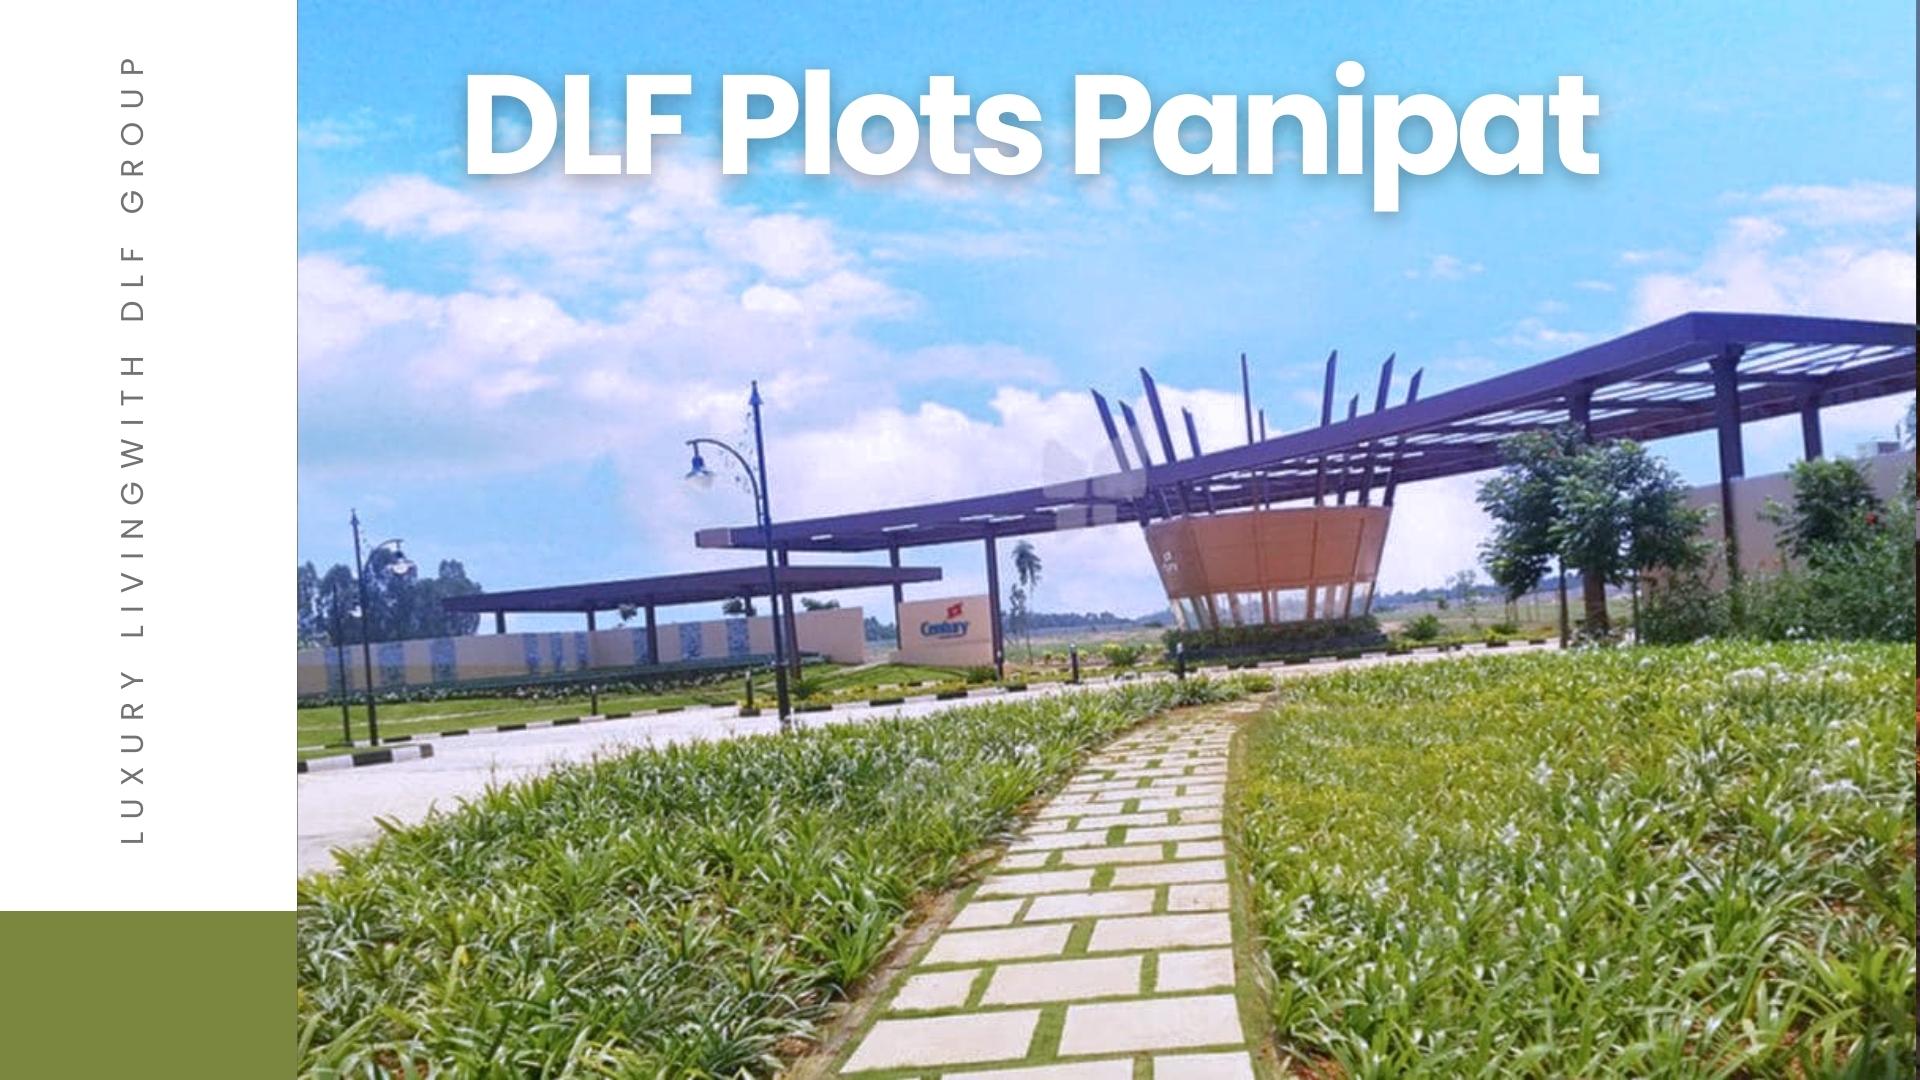 DLF Plots Panipat